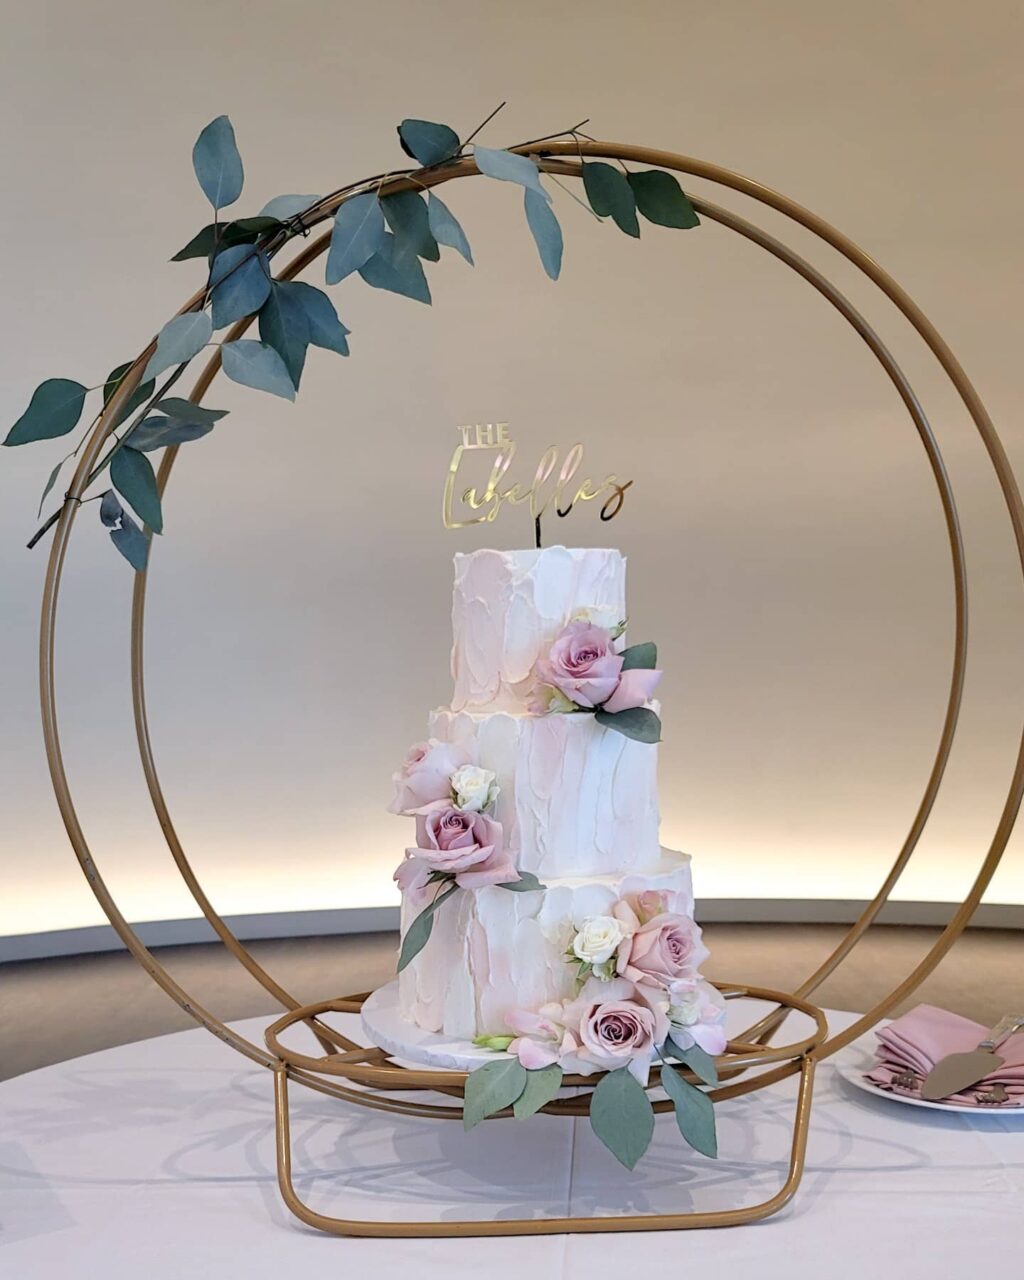 Tampa Bay Wedding Cake | Tampa Bay Cake Company